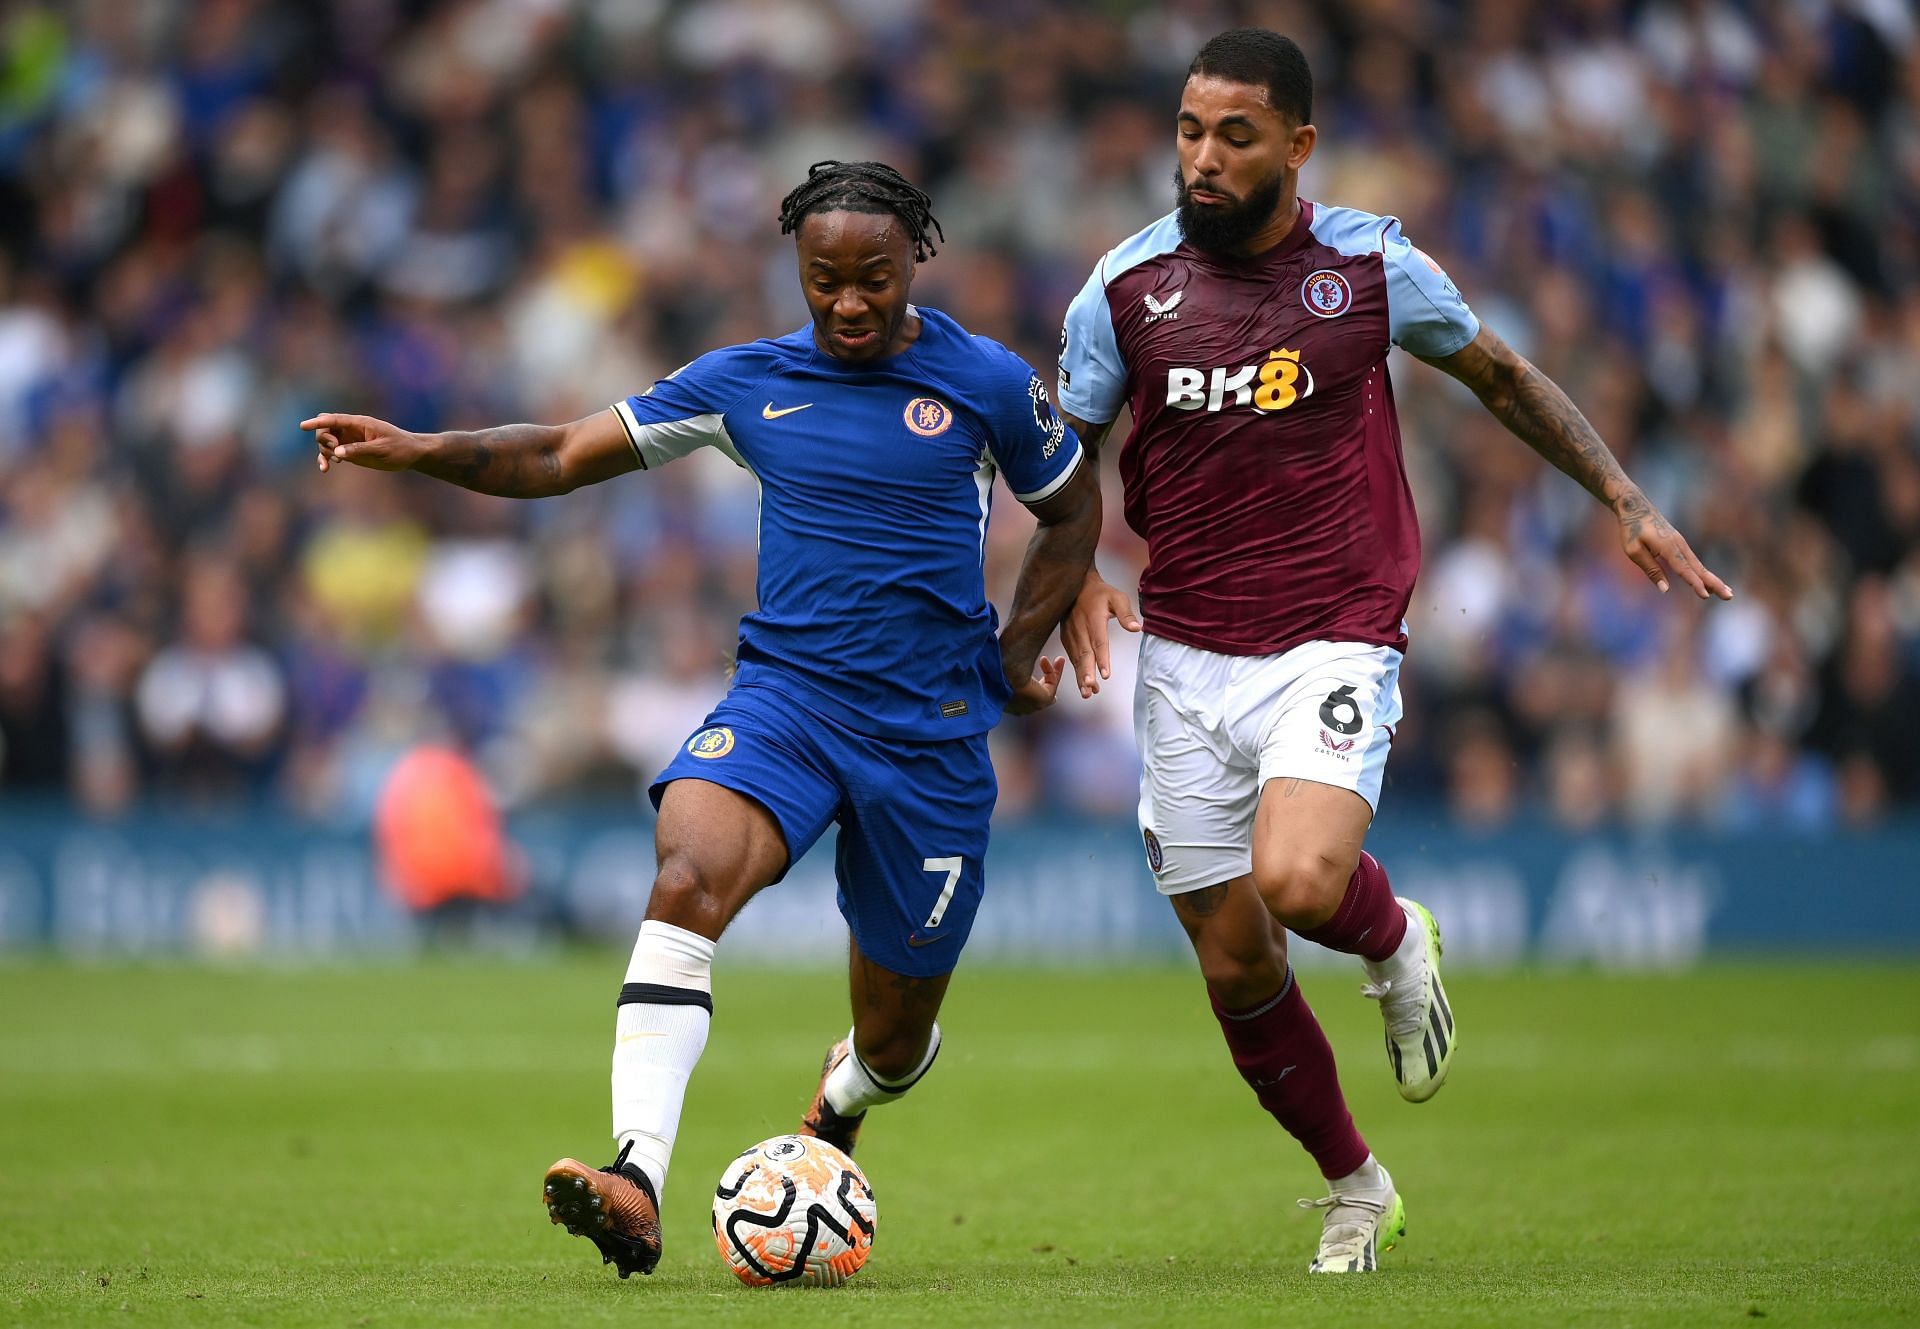 Chelsea FC v Aston Villa - Premier League